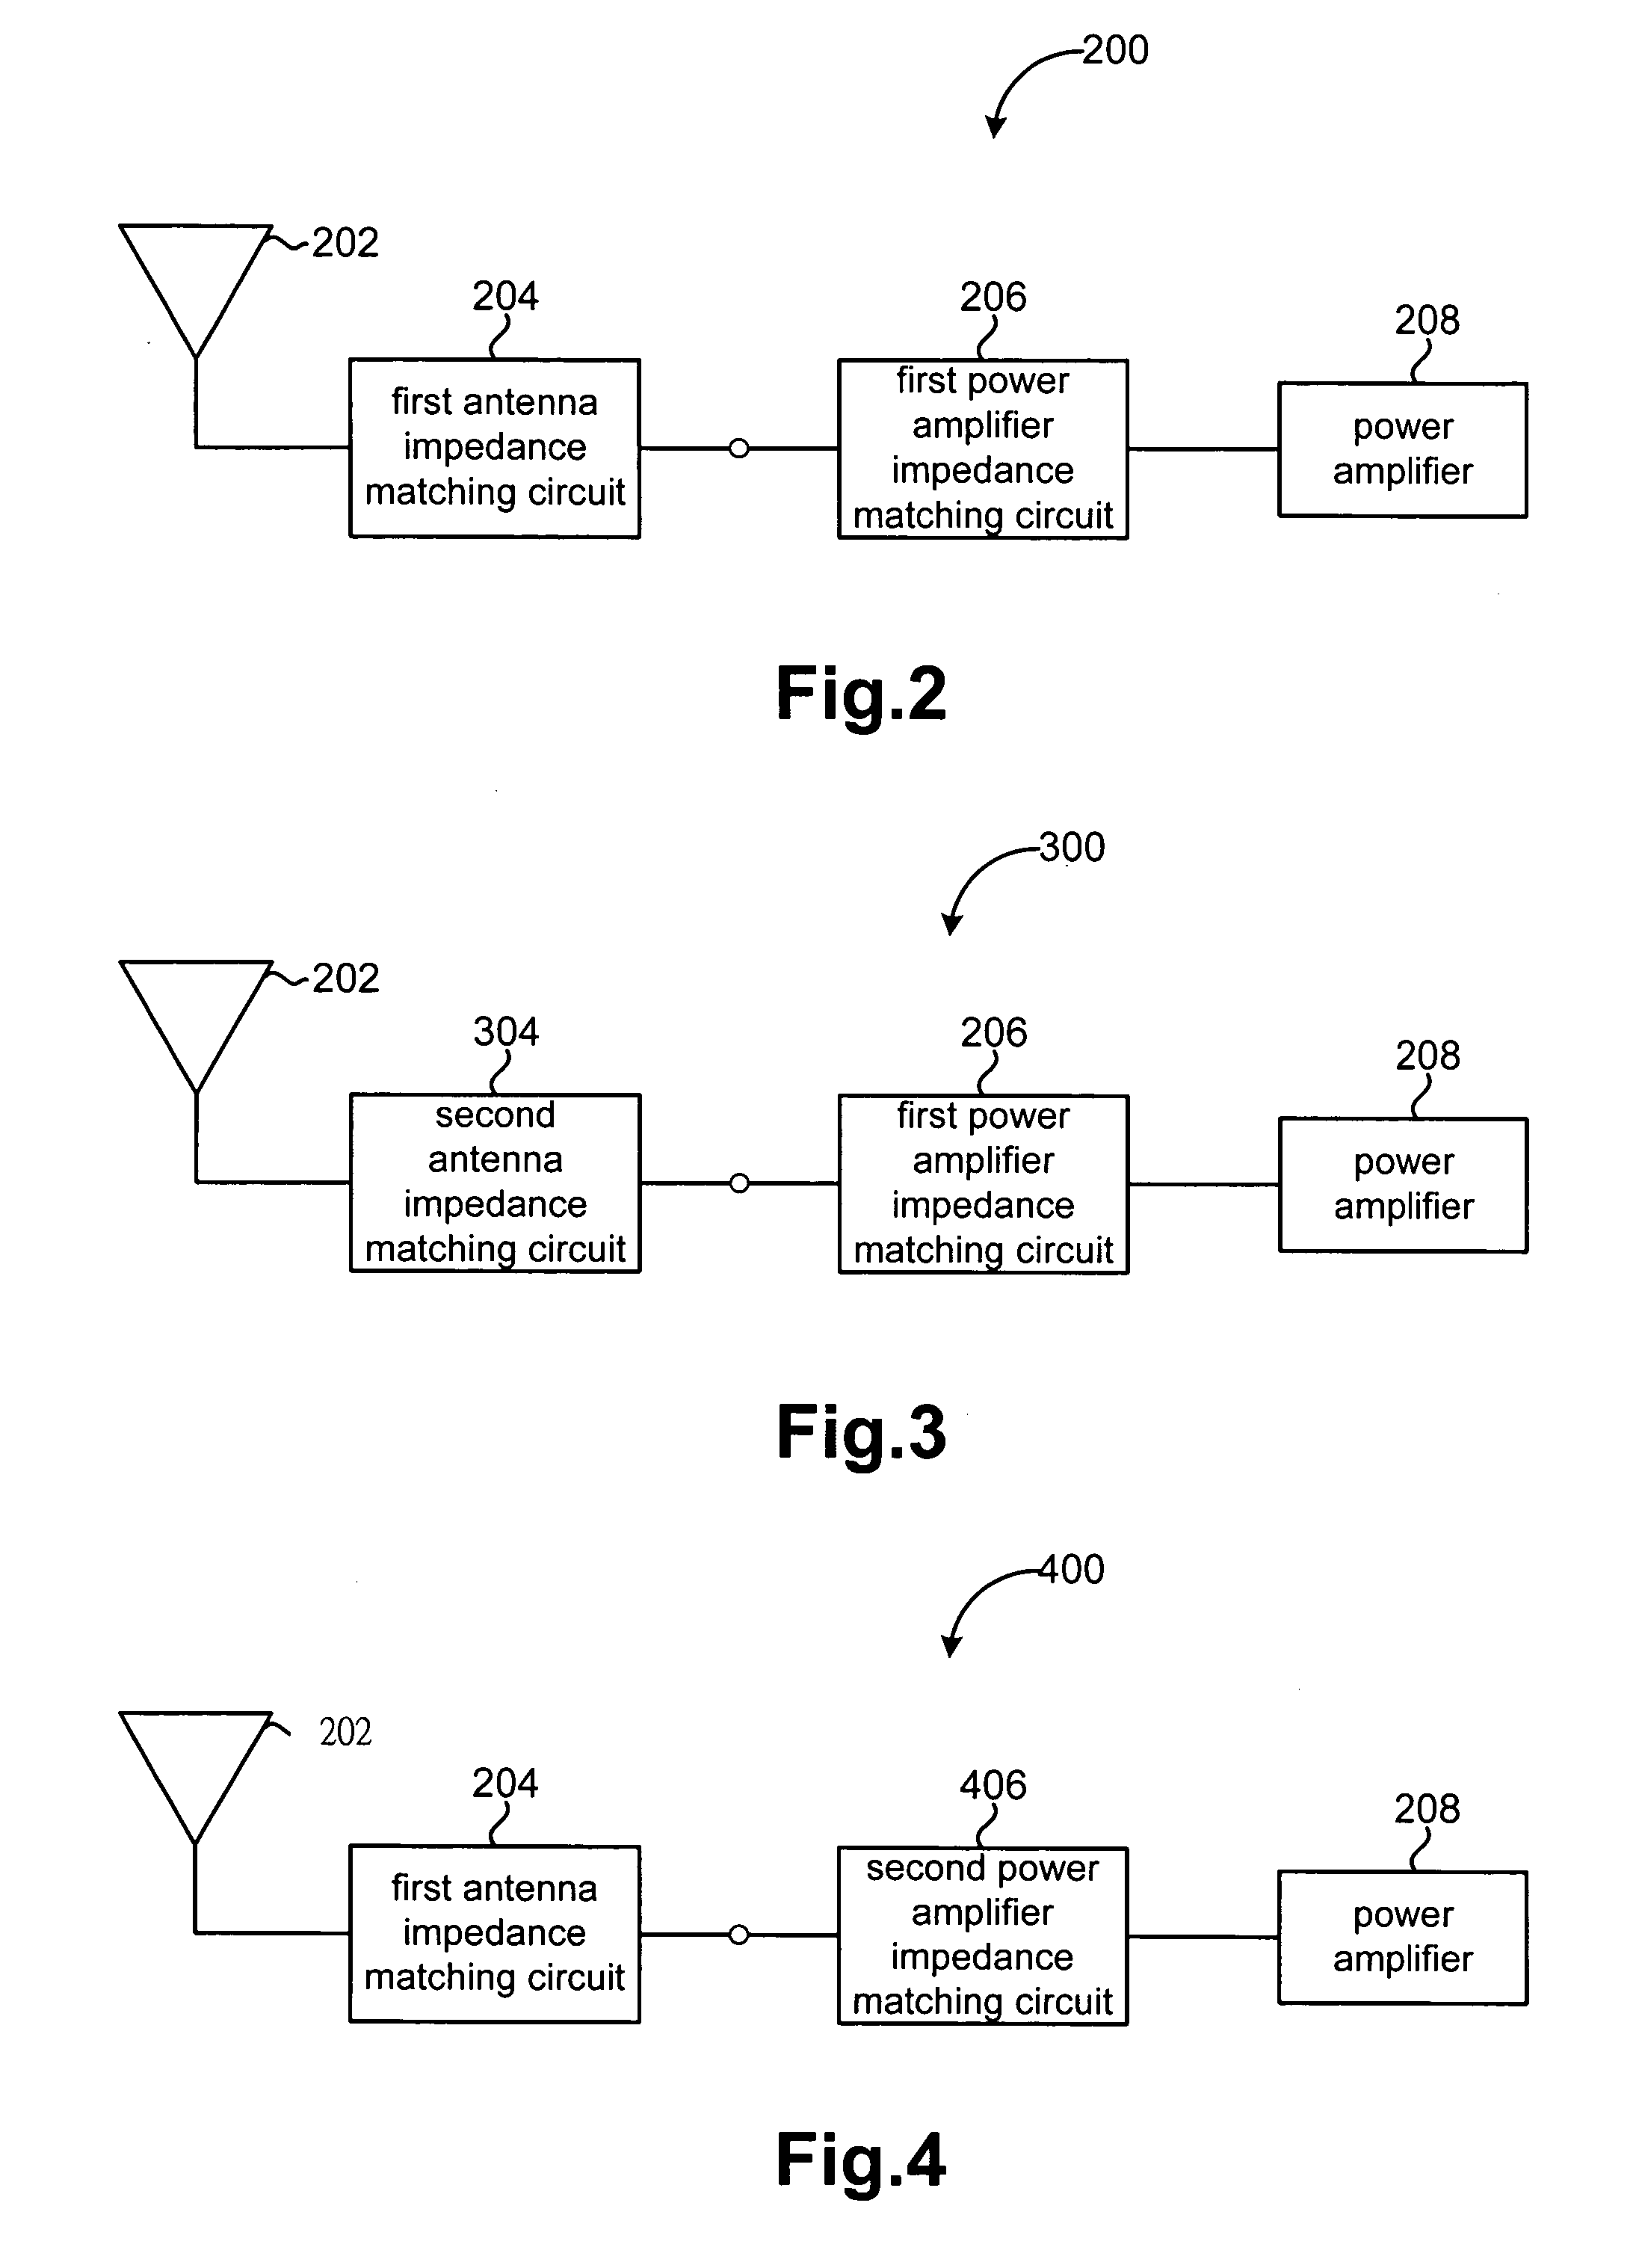 Impedance matching circuit design method